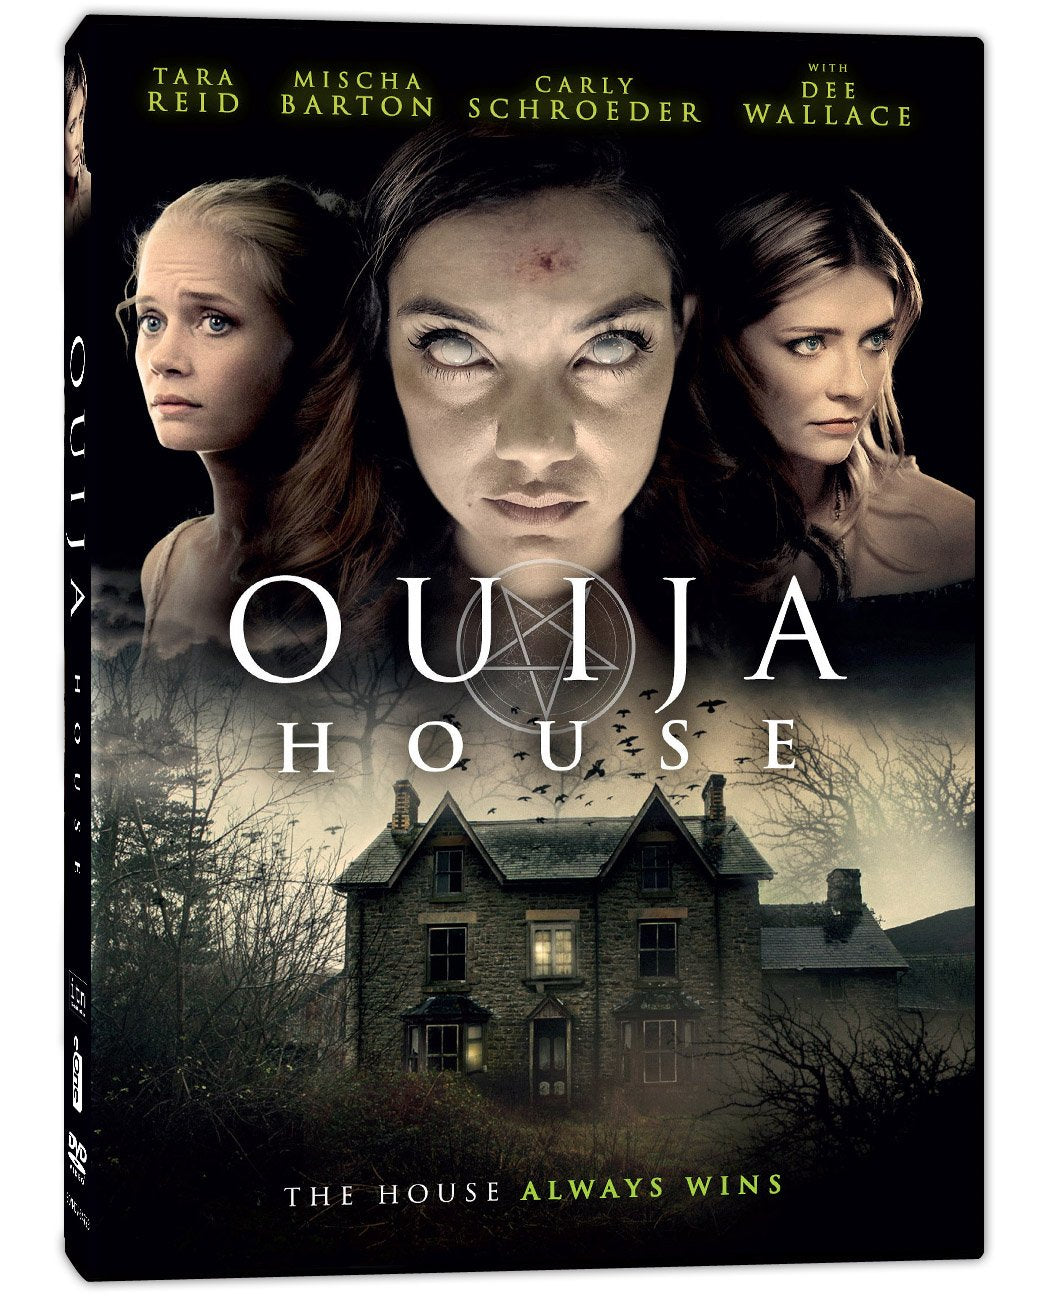 Ouija House - Darkside Records